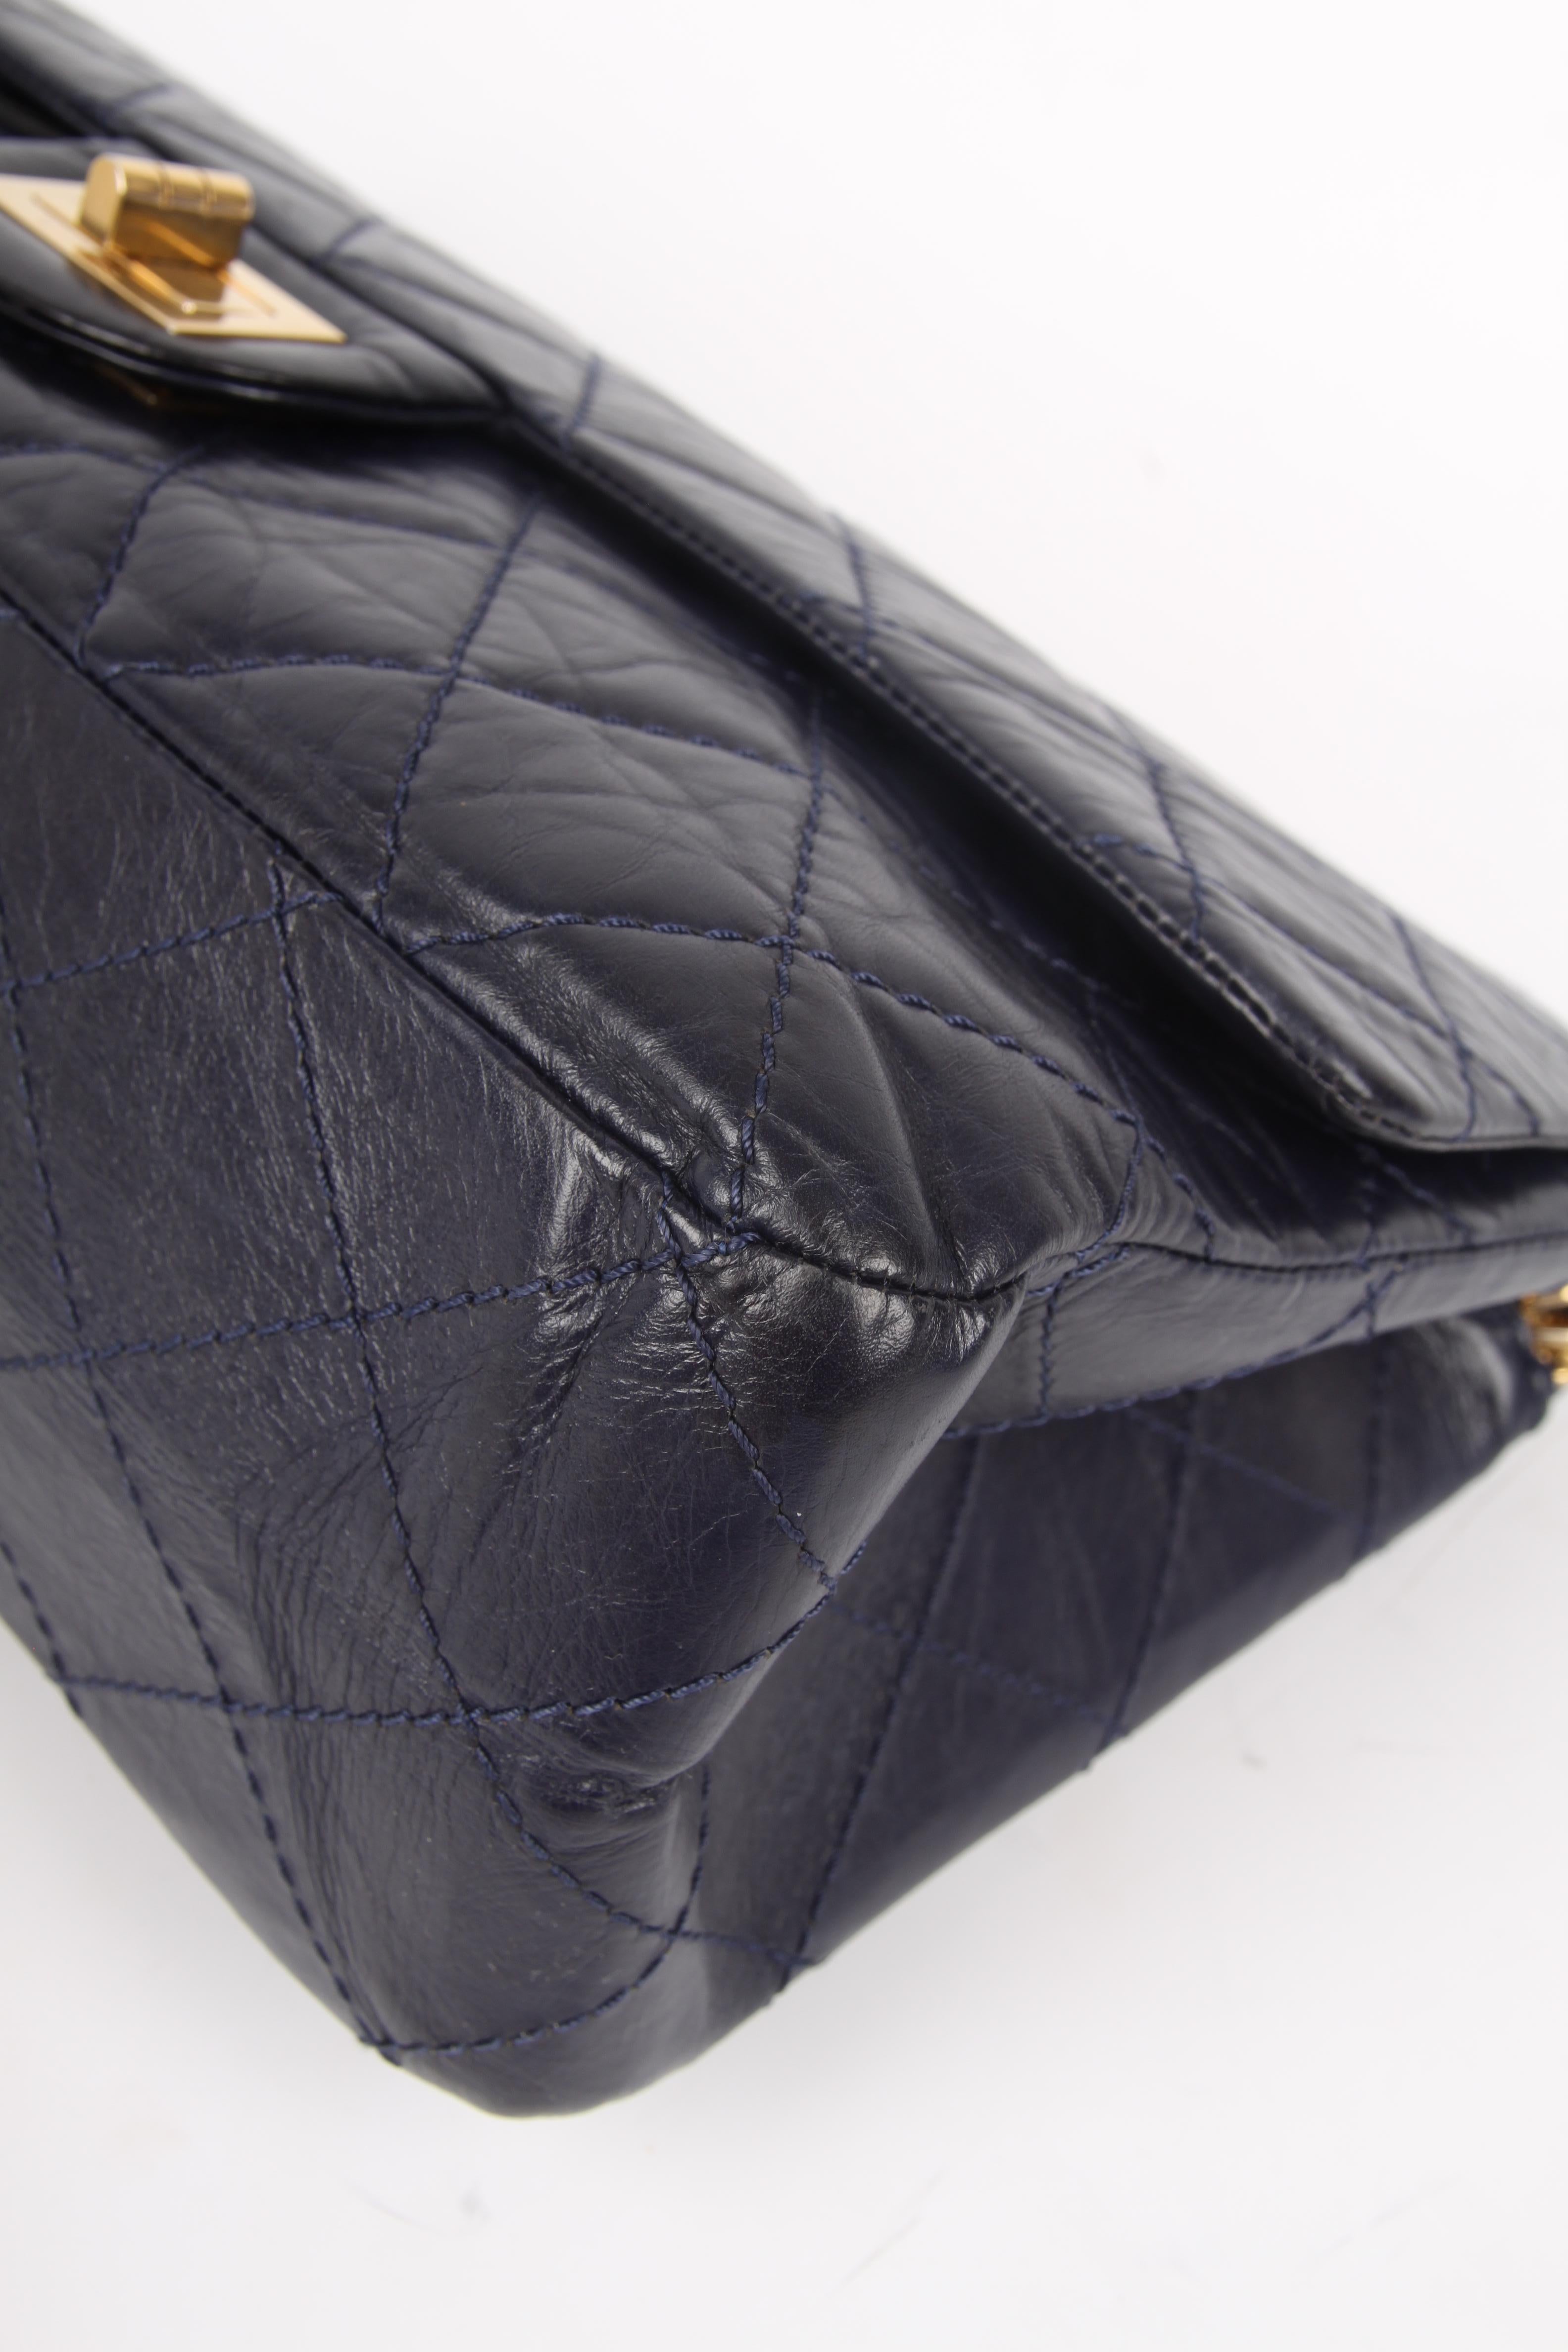 Chanel Reissue 2.55 Timeles Double Flap Bag 227 - dark blue 1